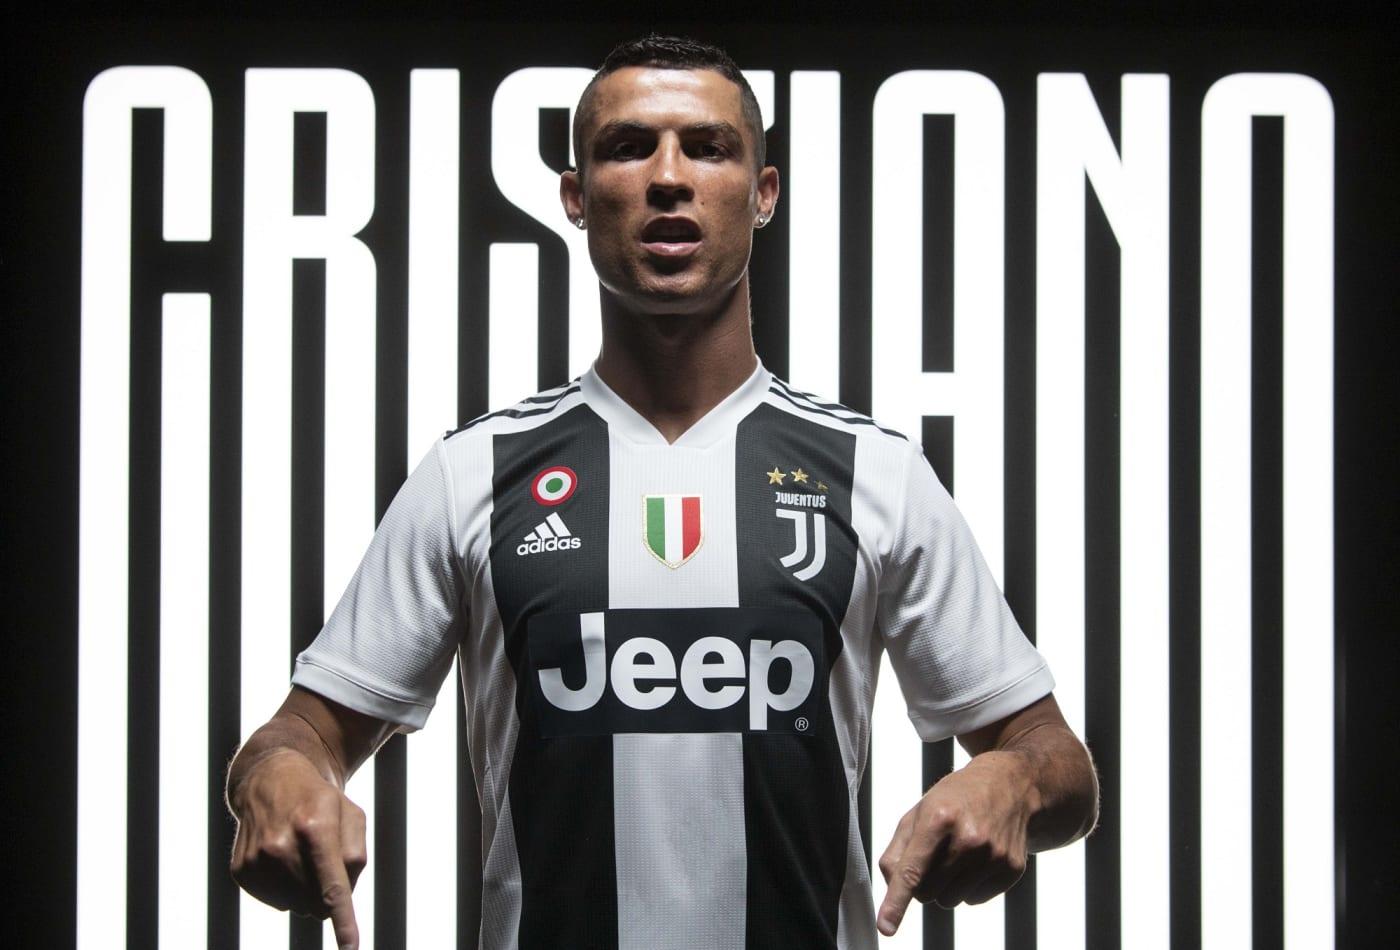 Juventus sold over $60 million of Ronaldo jerseys in just